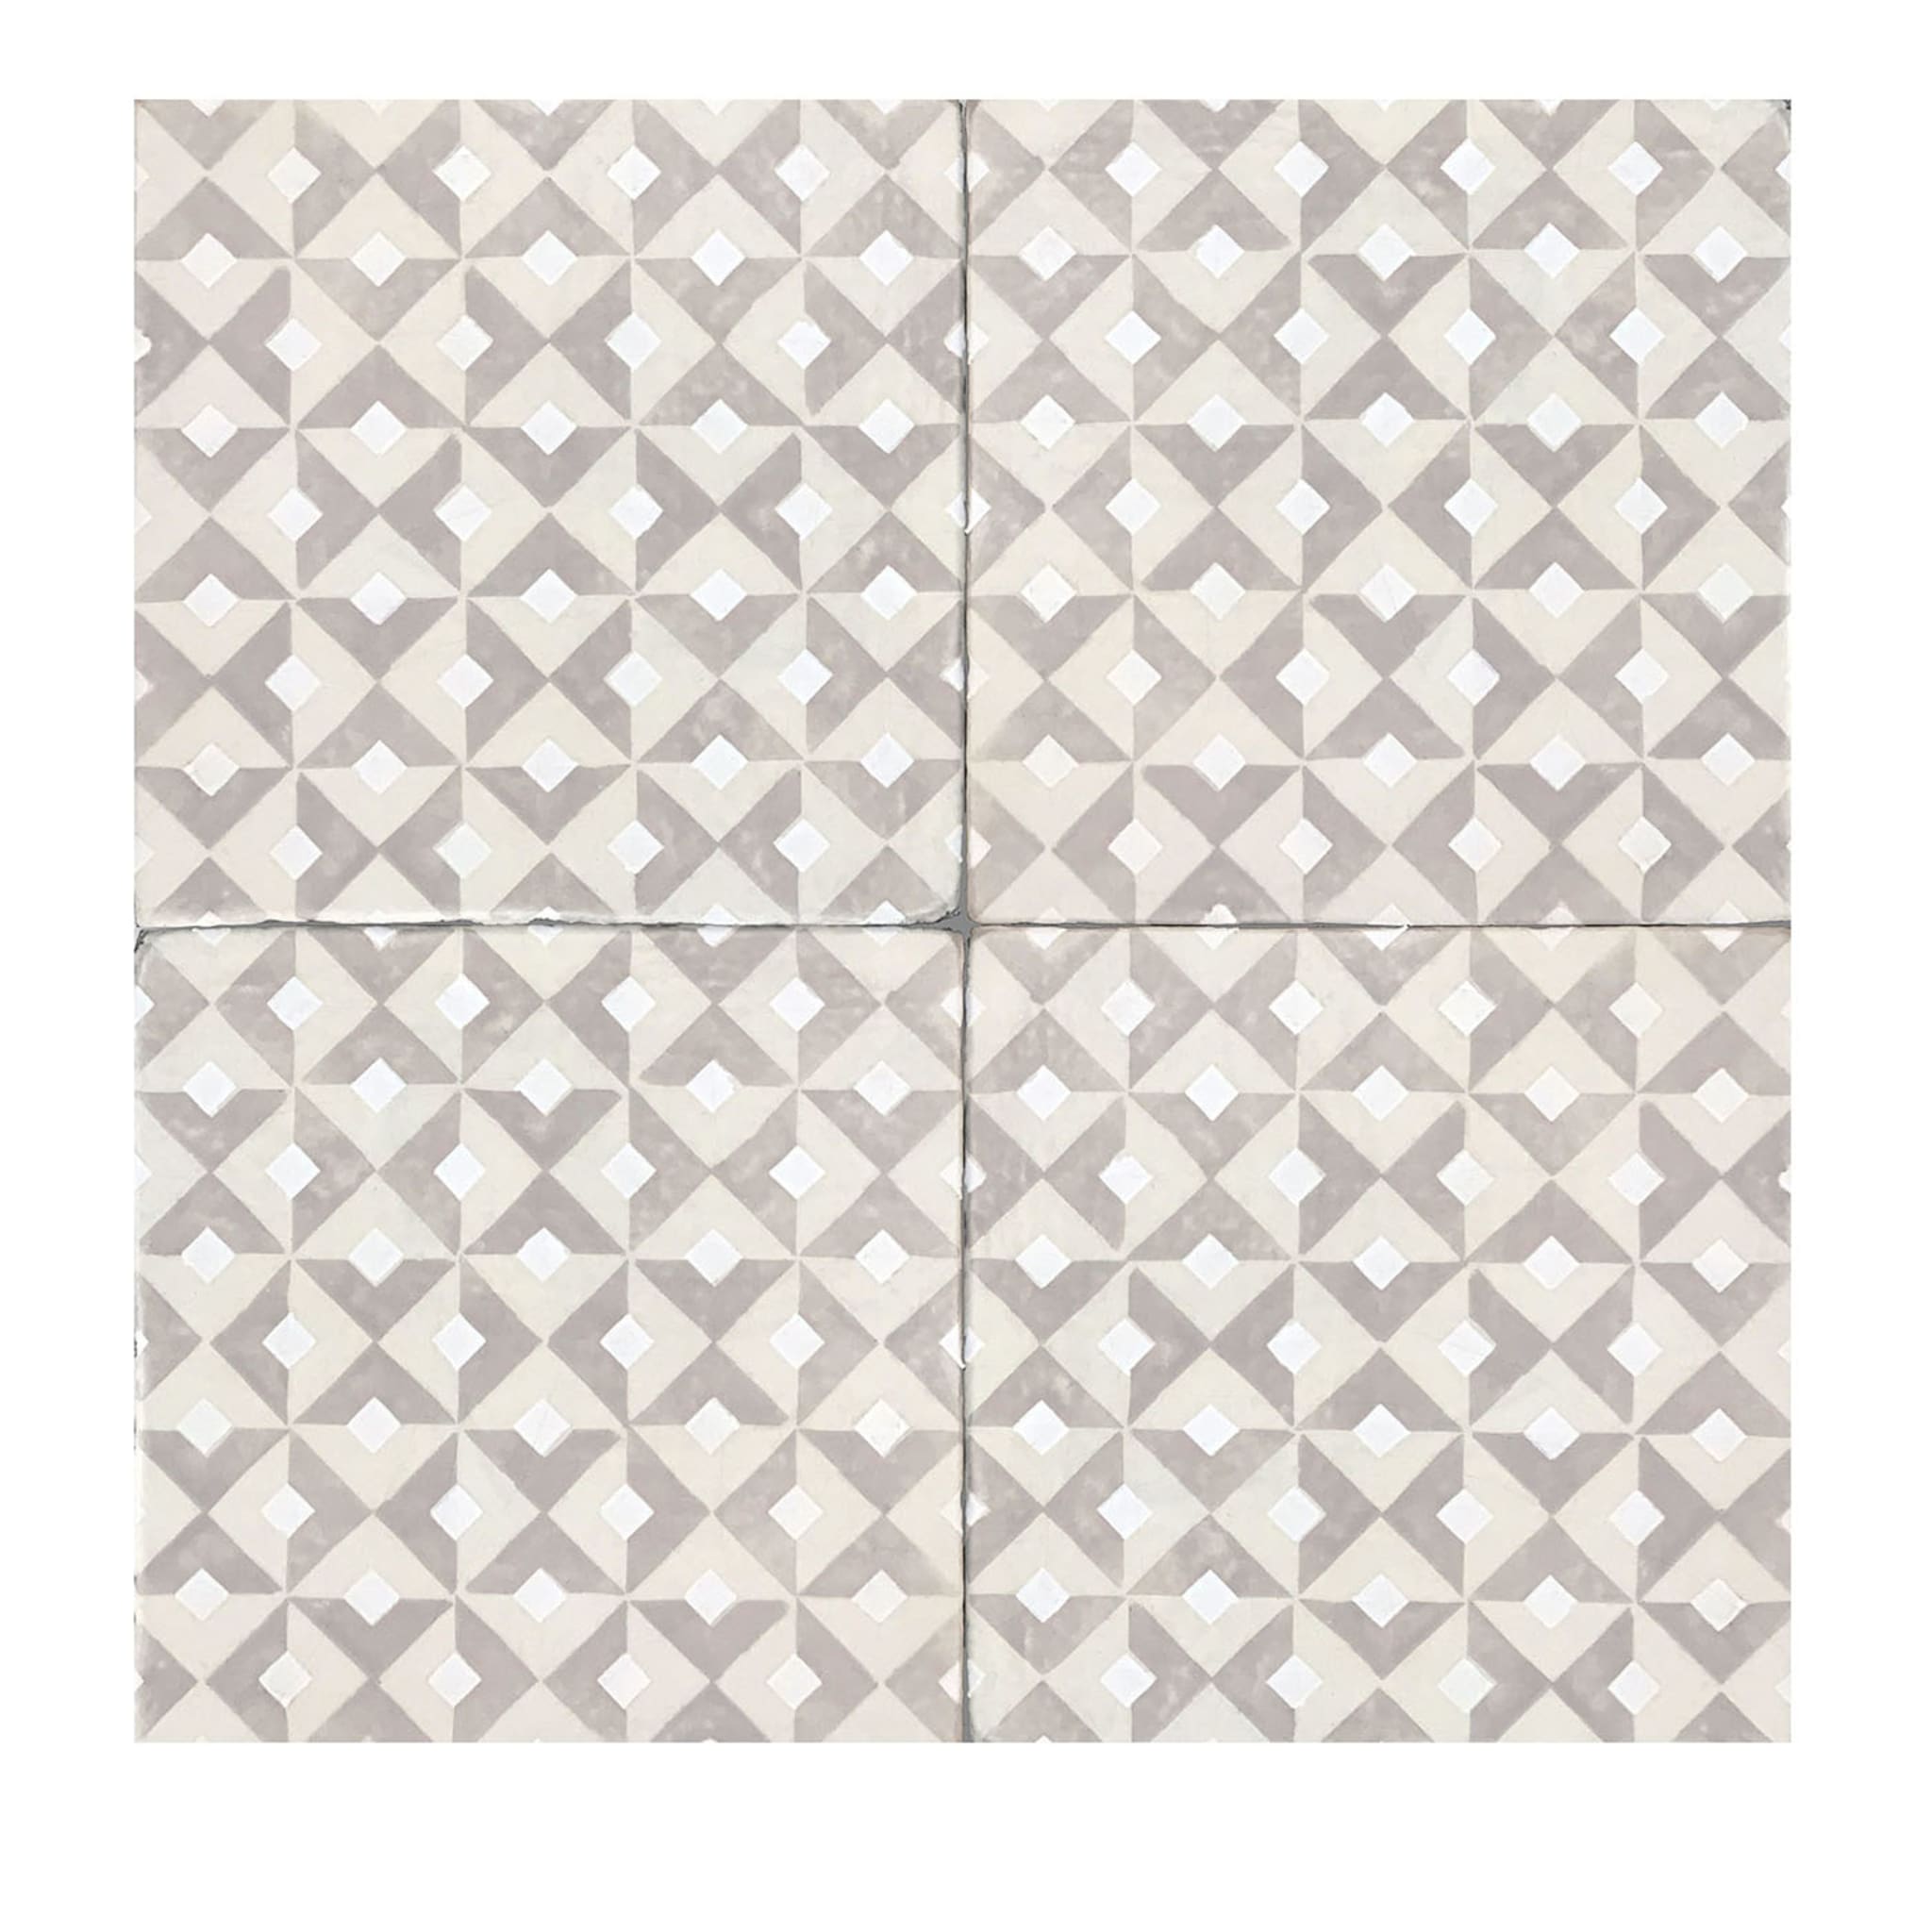 Daamè Set of 25 Square Ivory Tiles #1 - Main view